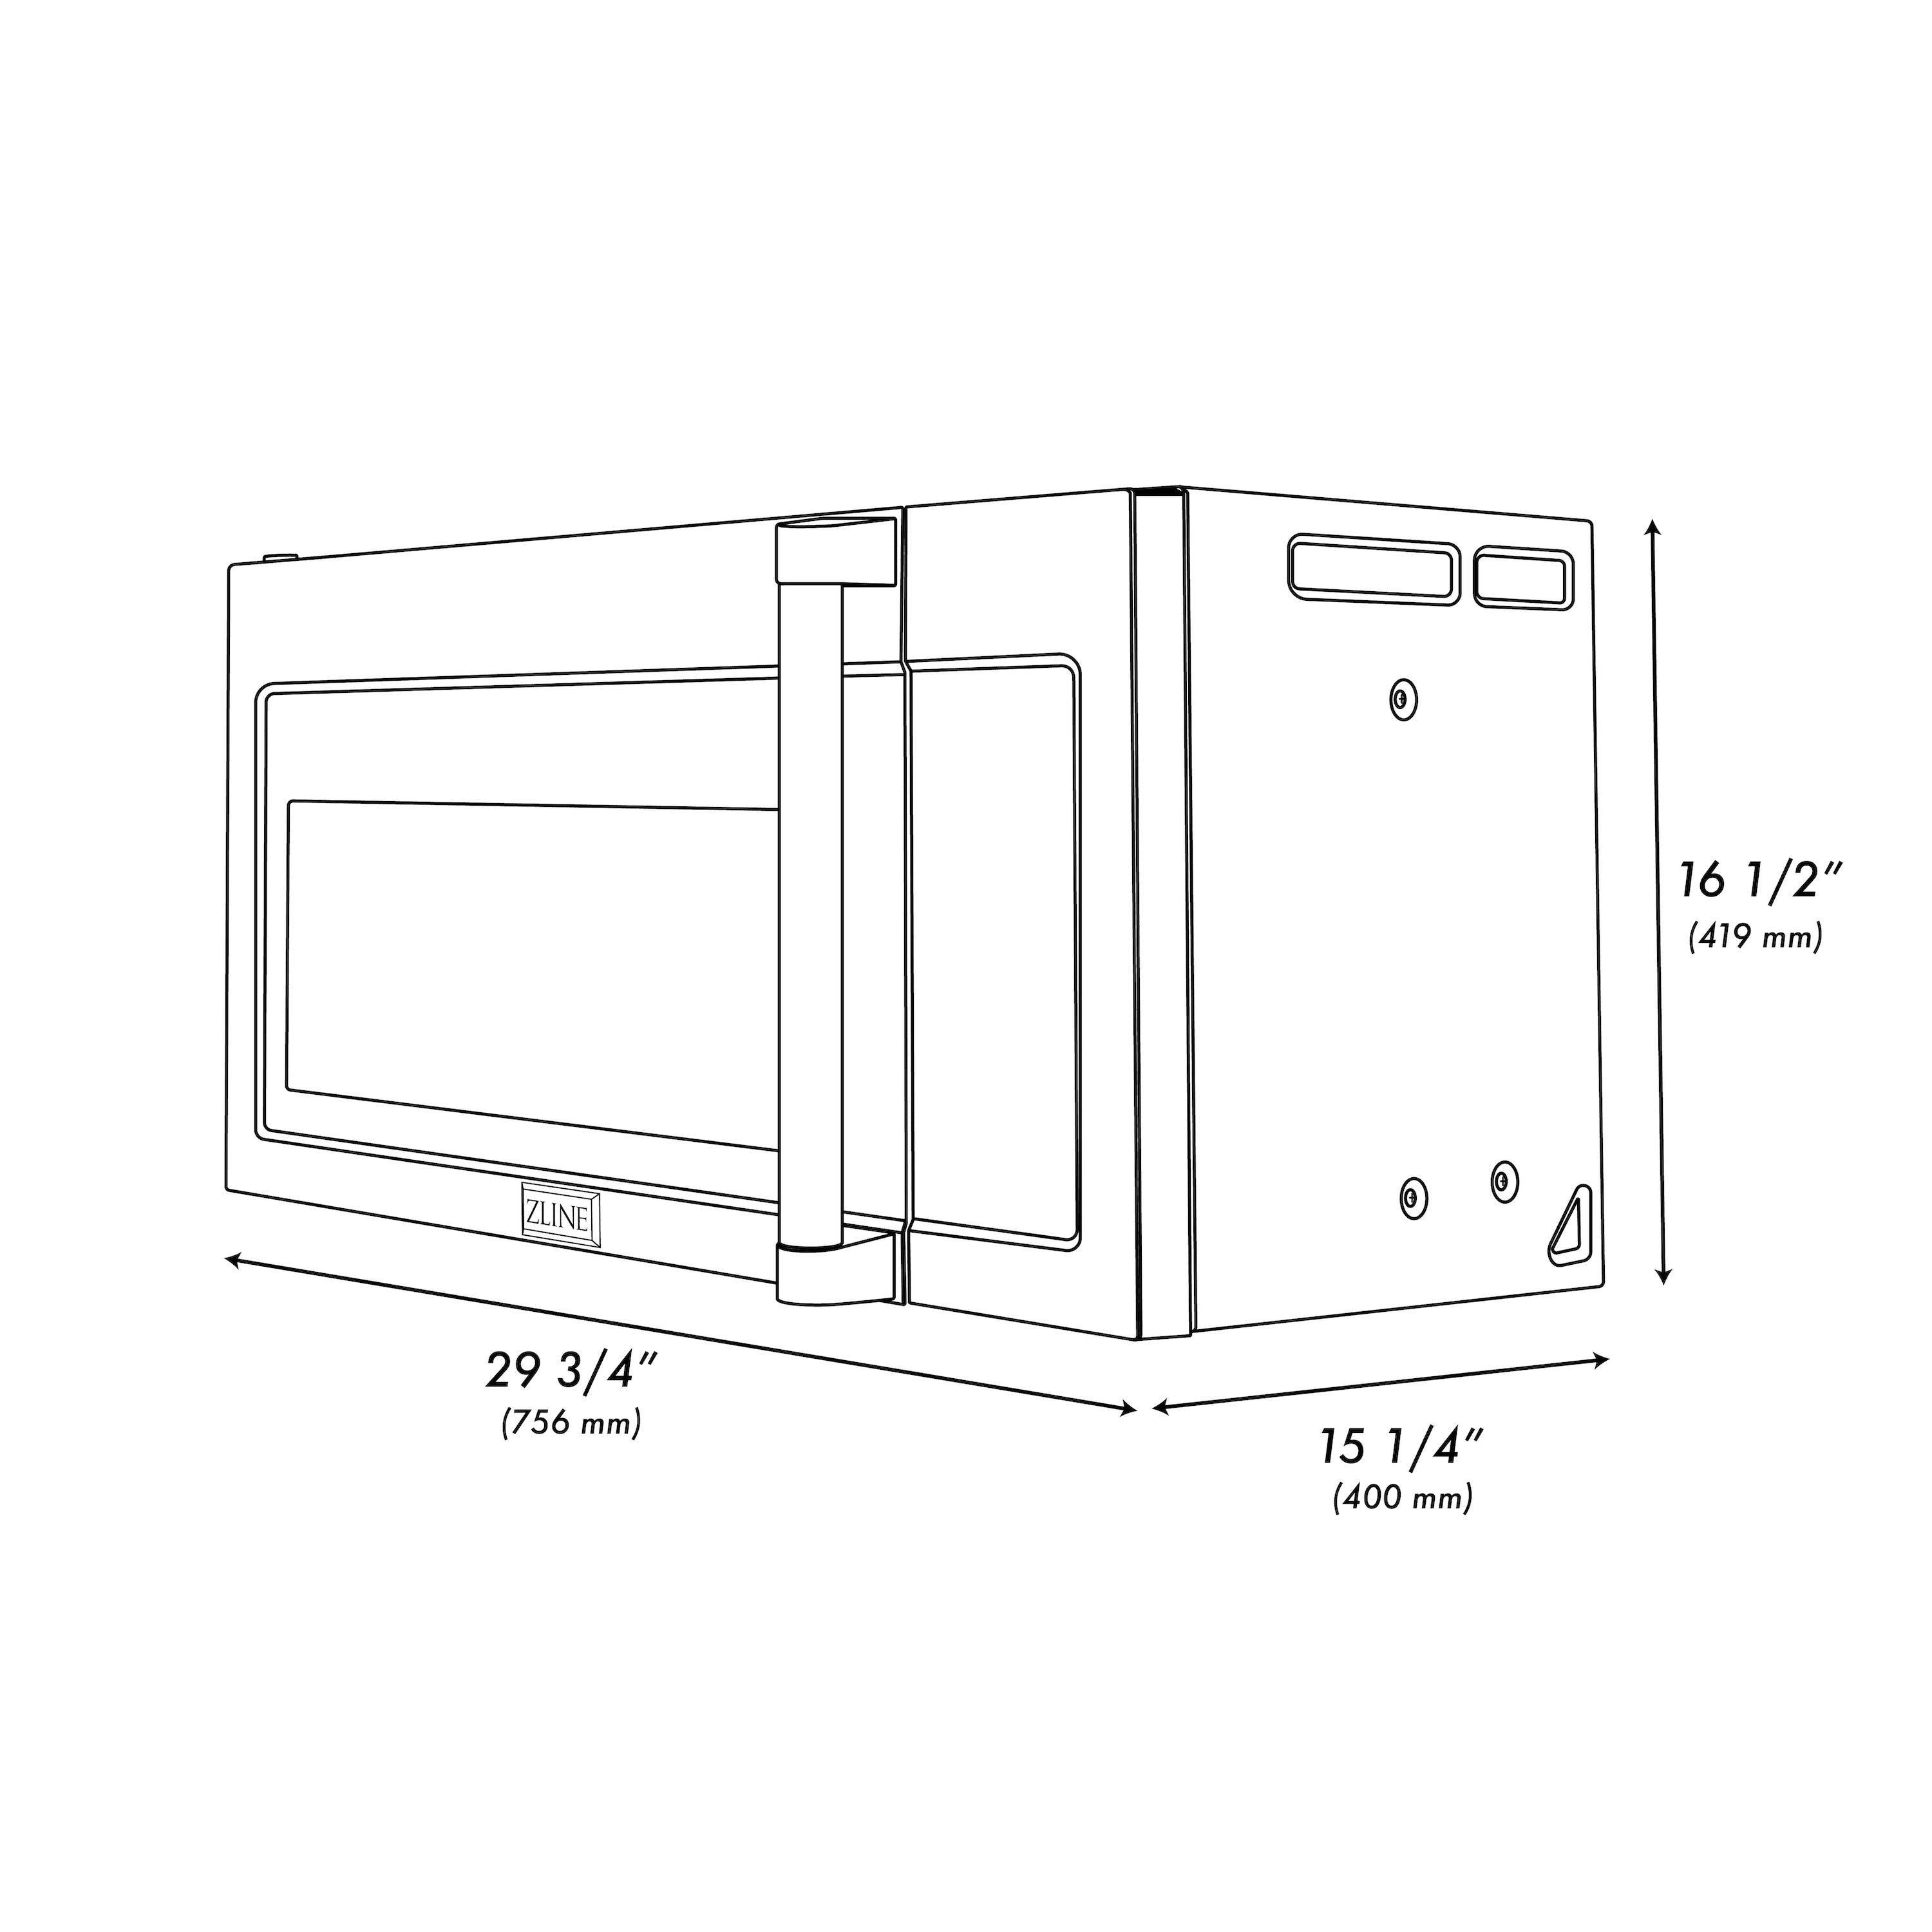 ZLINE 30" Over-the-Range Microwave Oven dimensional diagram.